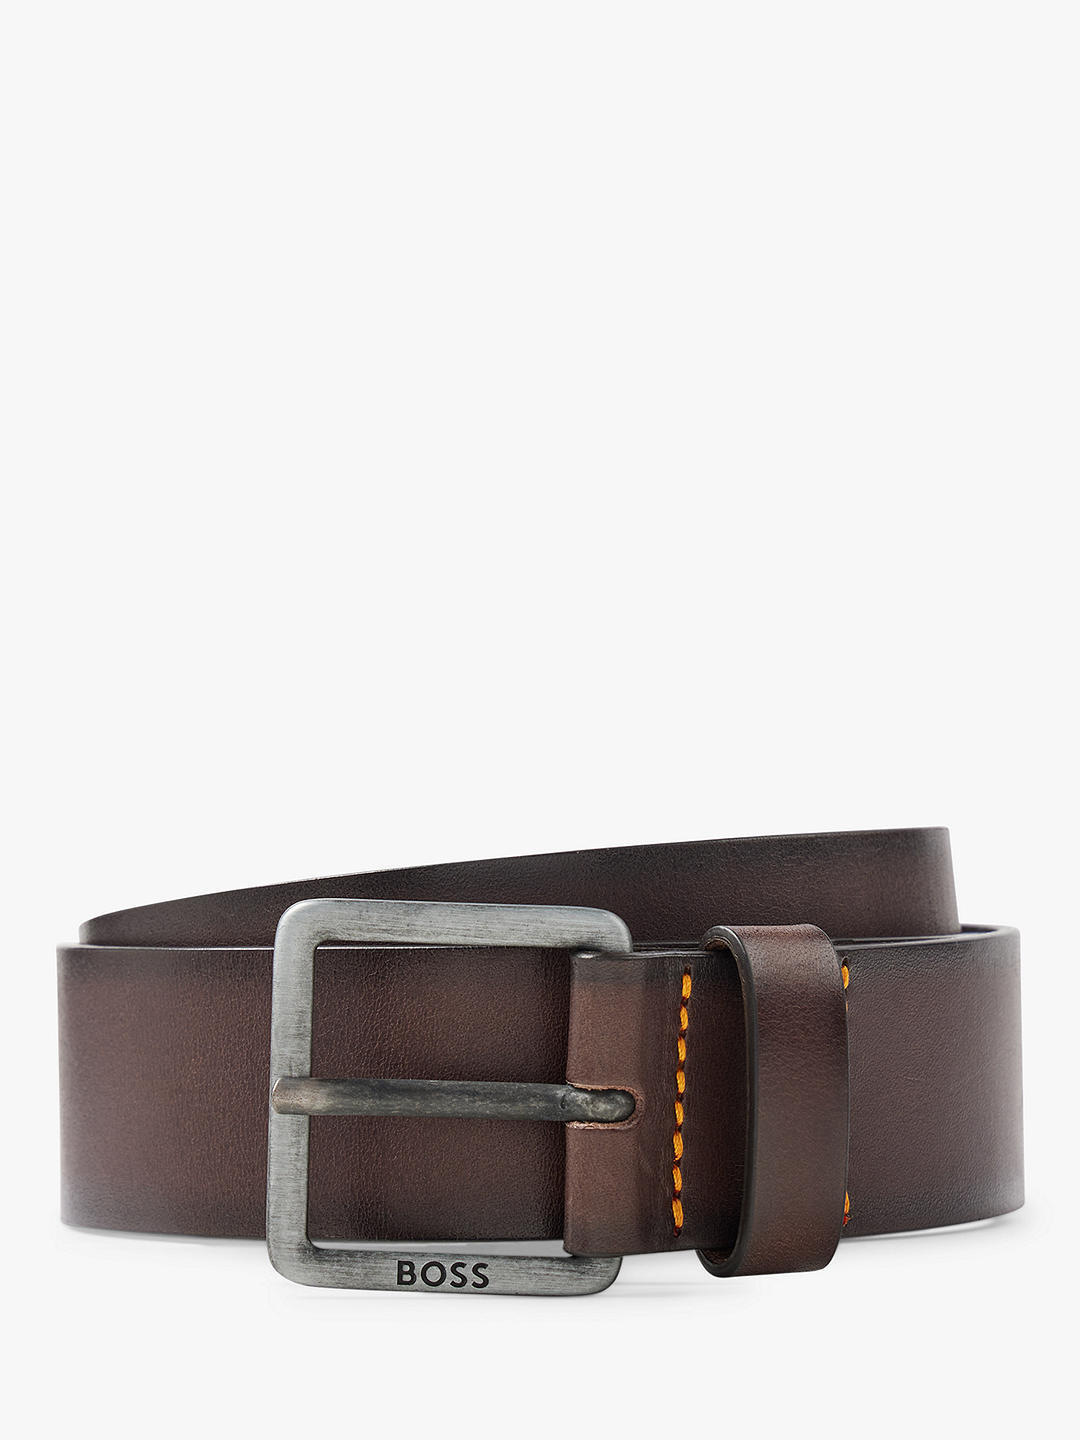 BOSS Jeeko Leather Belt, Dark Brown